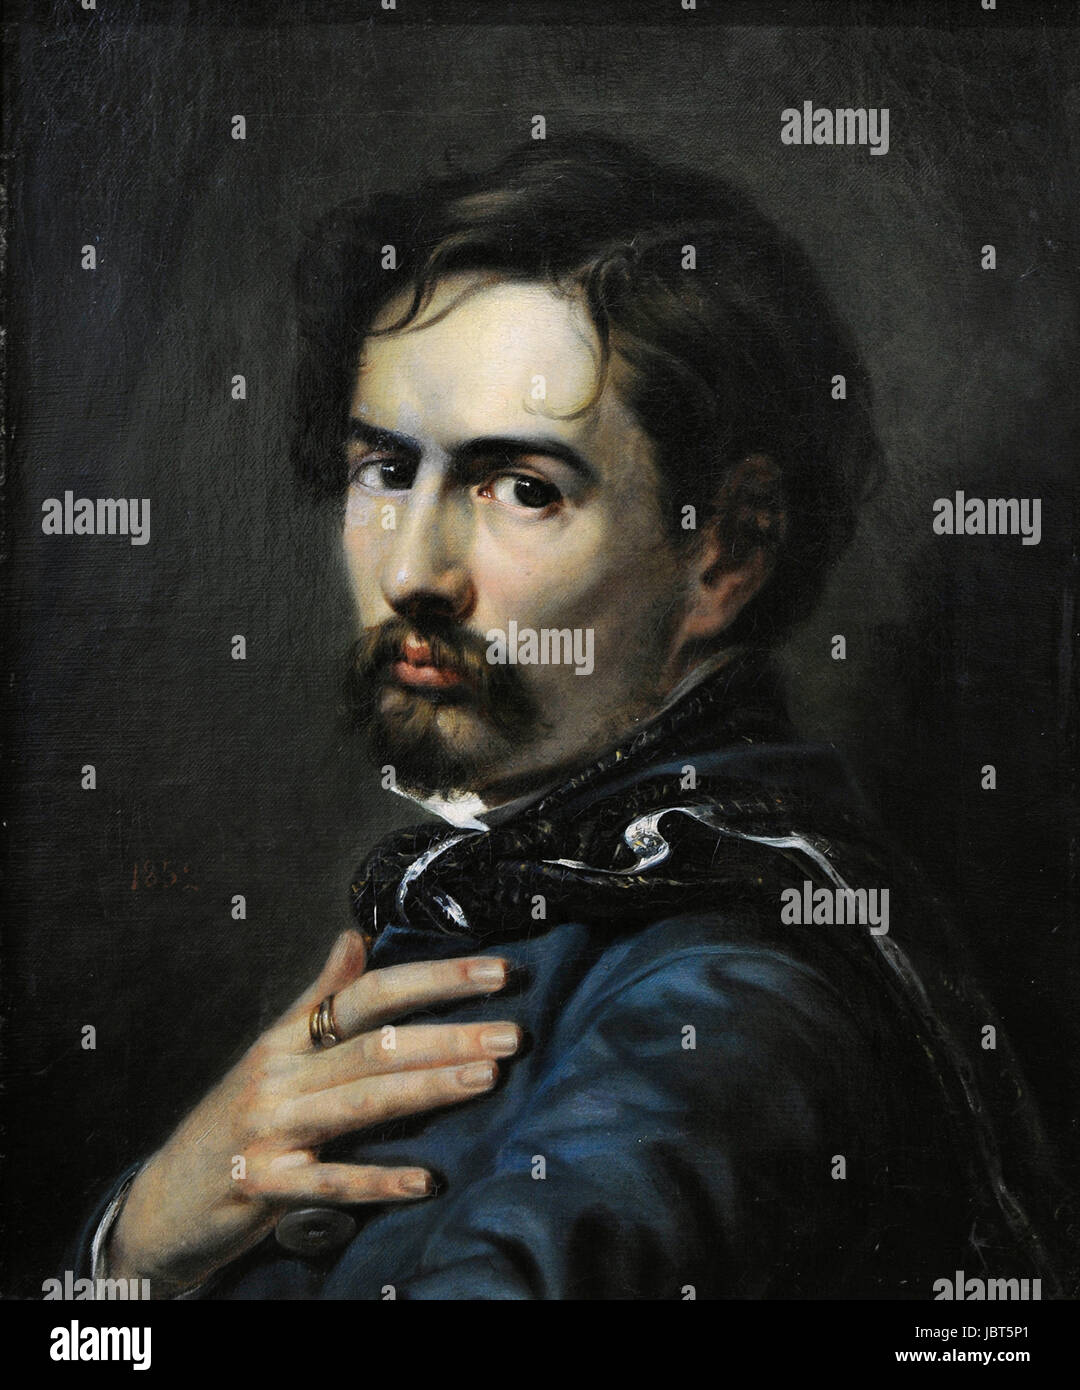 Boleslao Rusiecki (1824-1913). Self-portrait. Vilnius Picture Gallery. La Lituania. Foto Stock